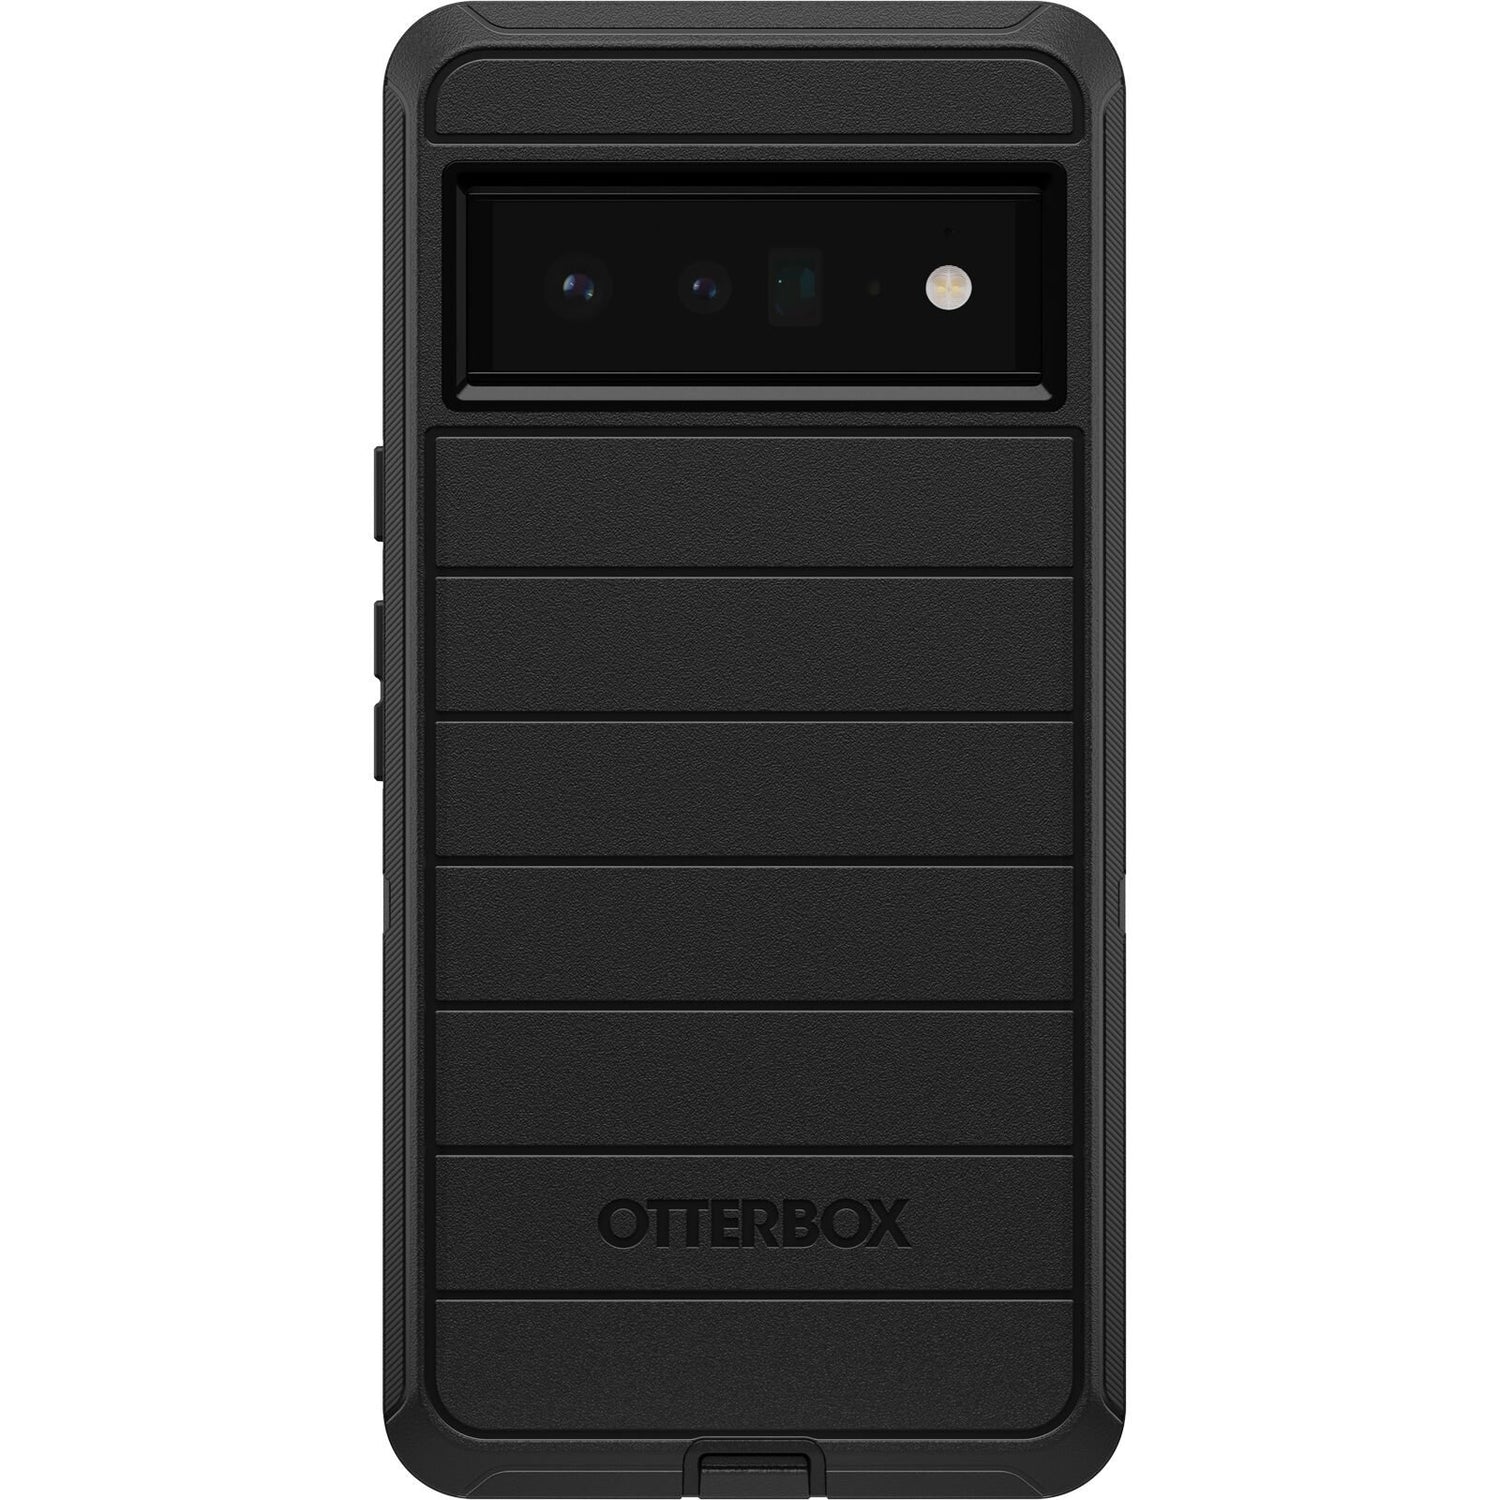 OtterBox DEFENDER SERIES Case for Google Pixel 6 Pro - Black (New)